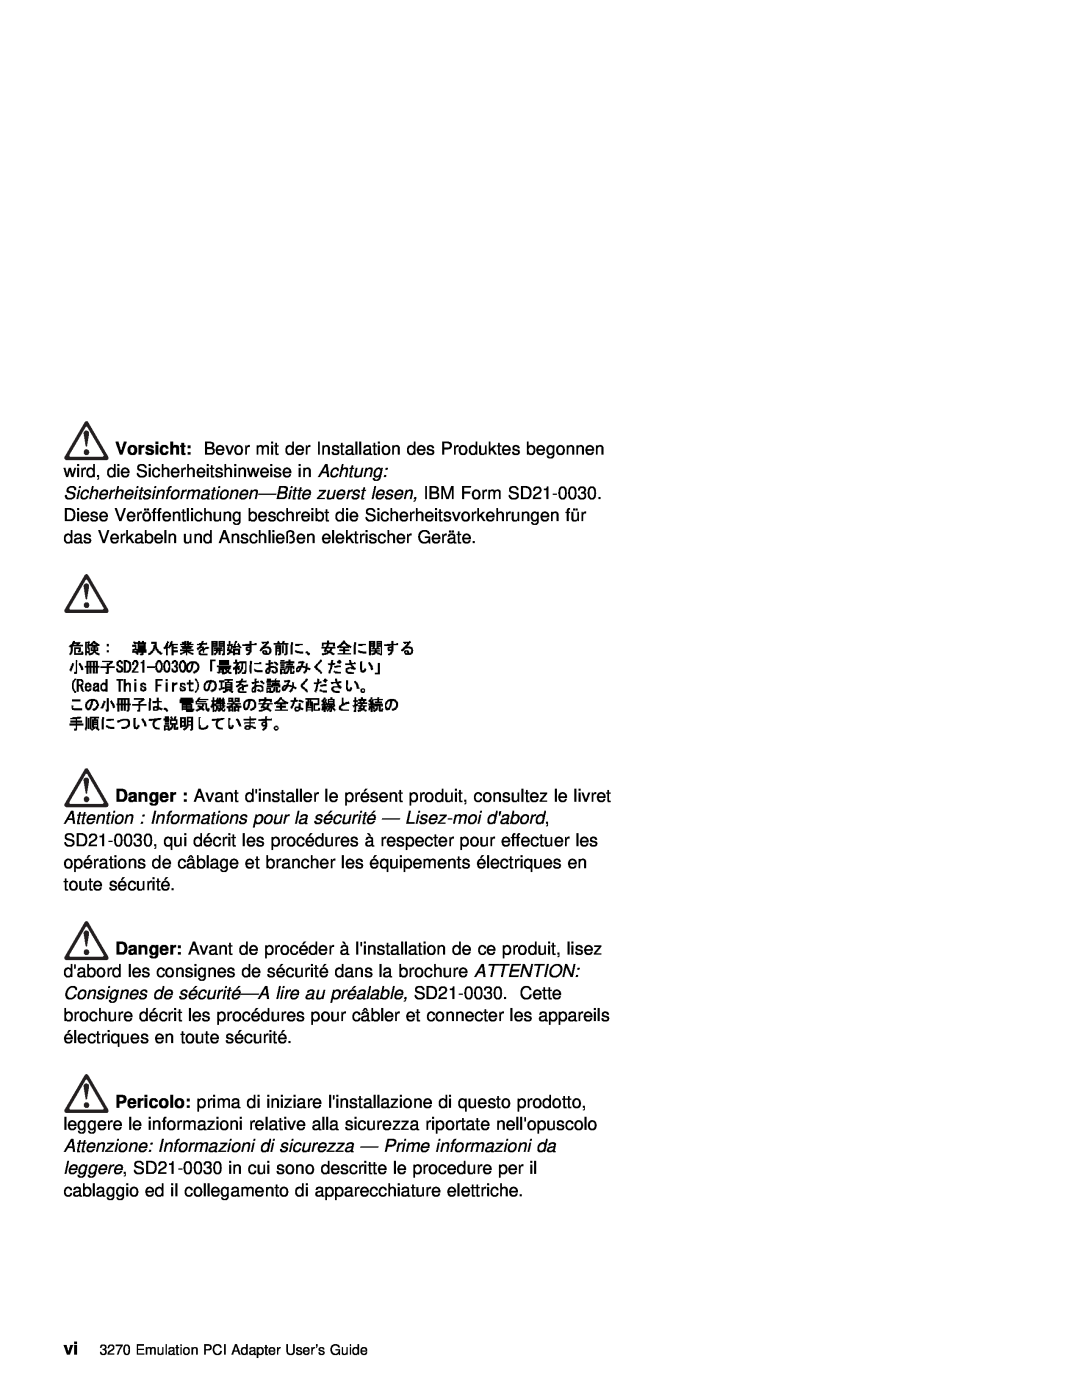 IBM manual vi 3270 Emulation PCI Adapter User’s Guide 